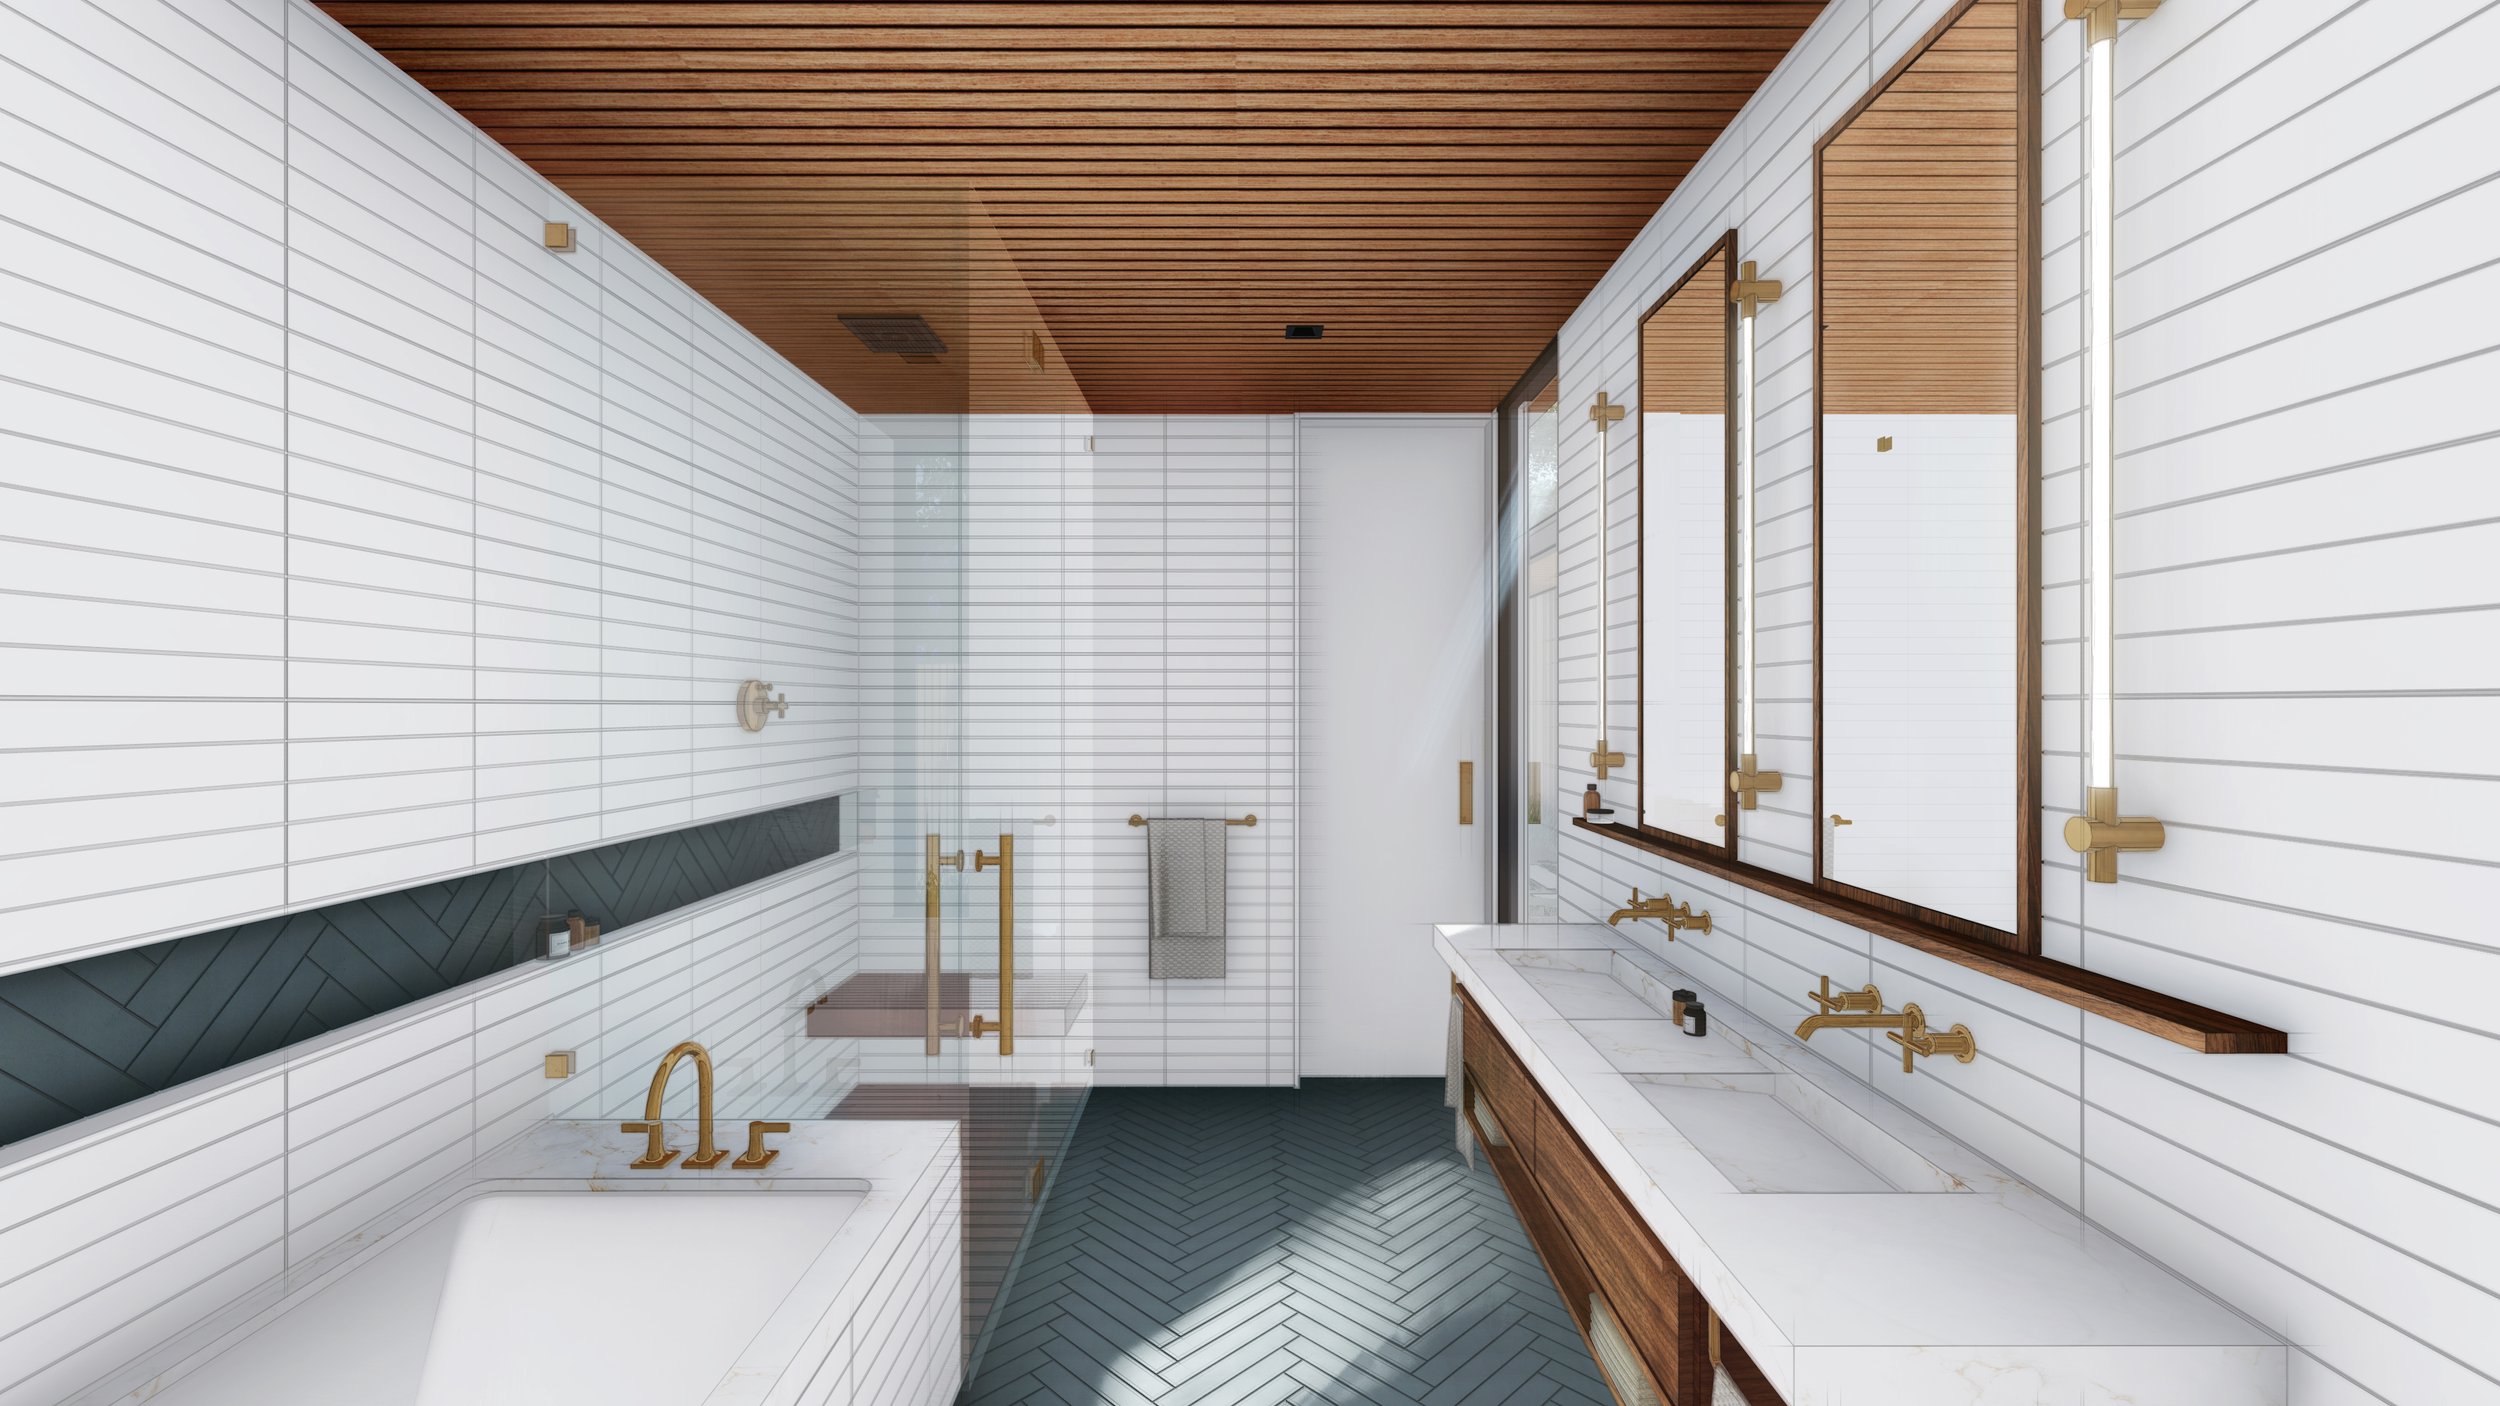 20230314_Interior - Bathroom - Looking at Steam Shower.jpg